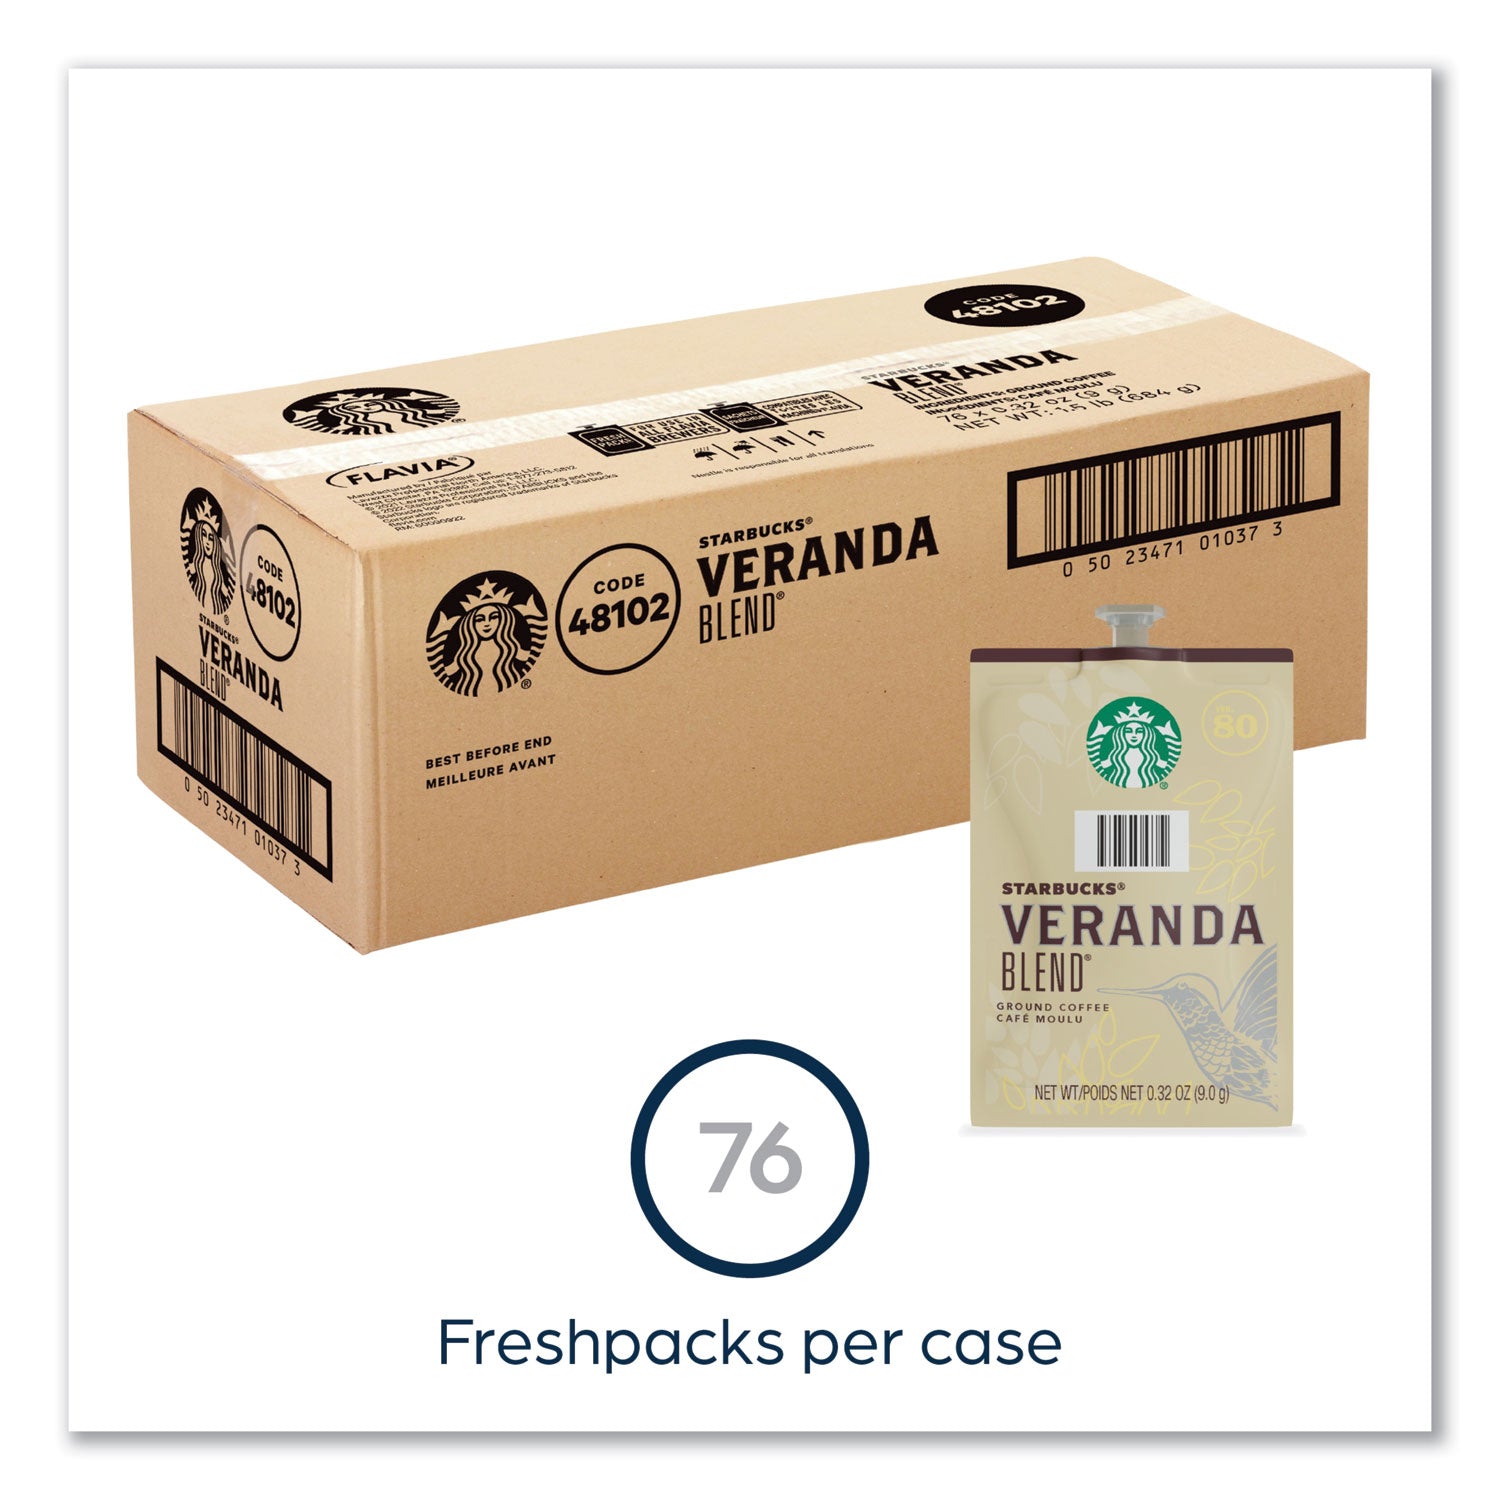 starbucks-veranda-blend-coffee-freshpack-veranda-blend-032-oz-pouch-76-carton_lav48102 - 8